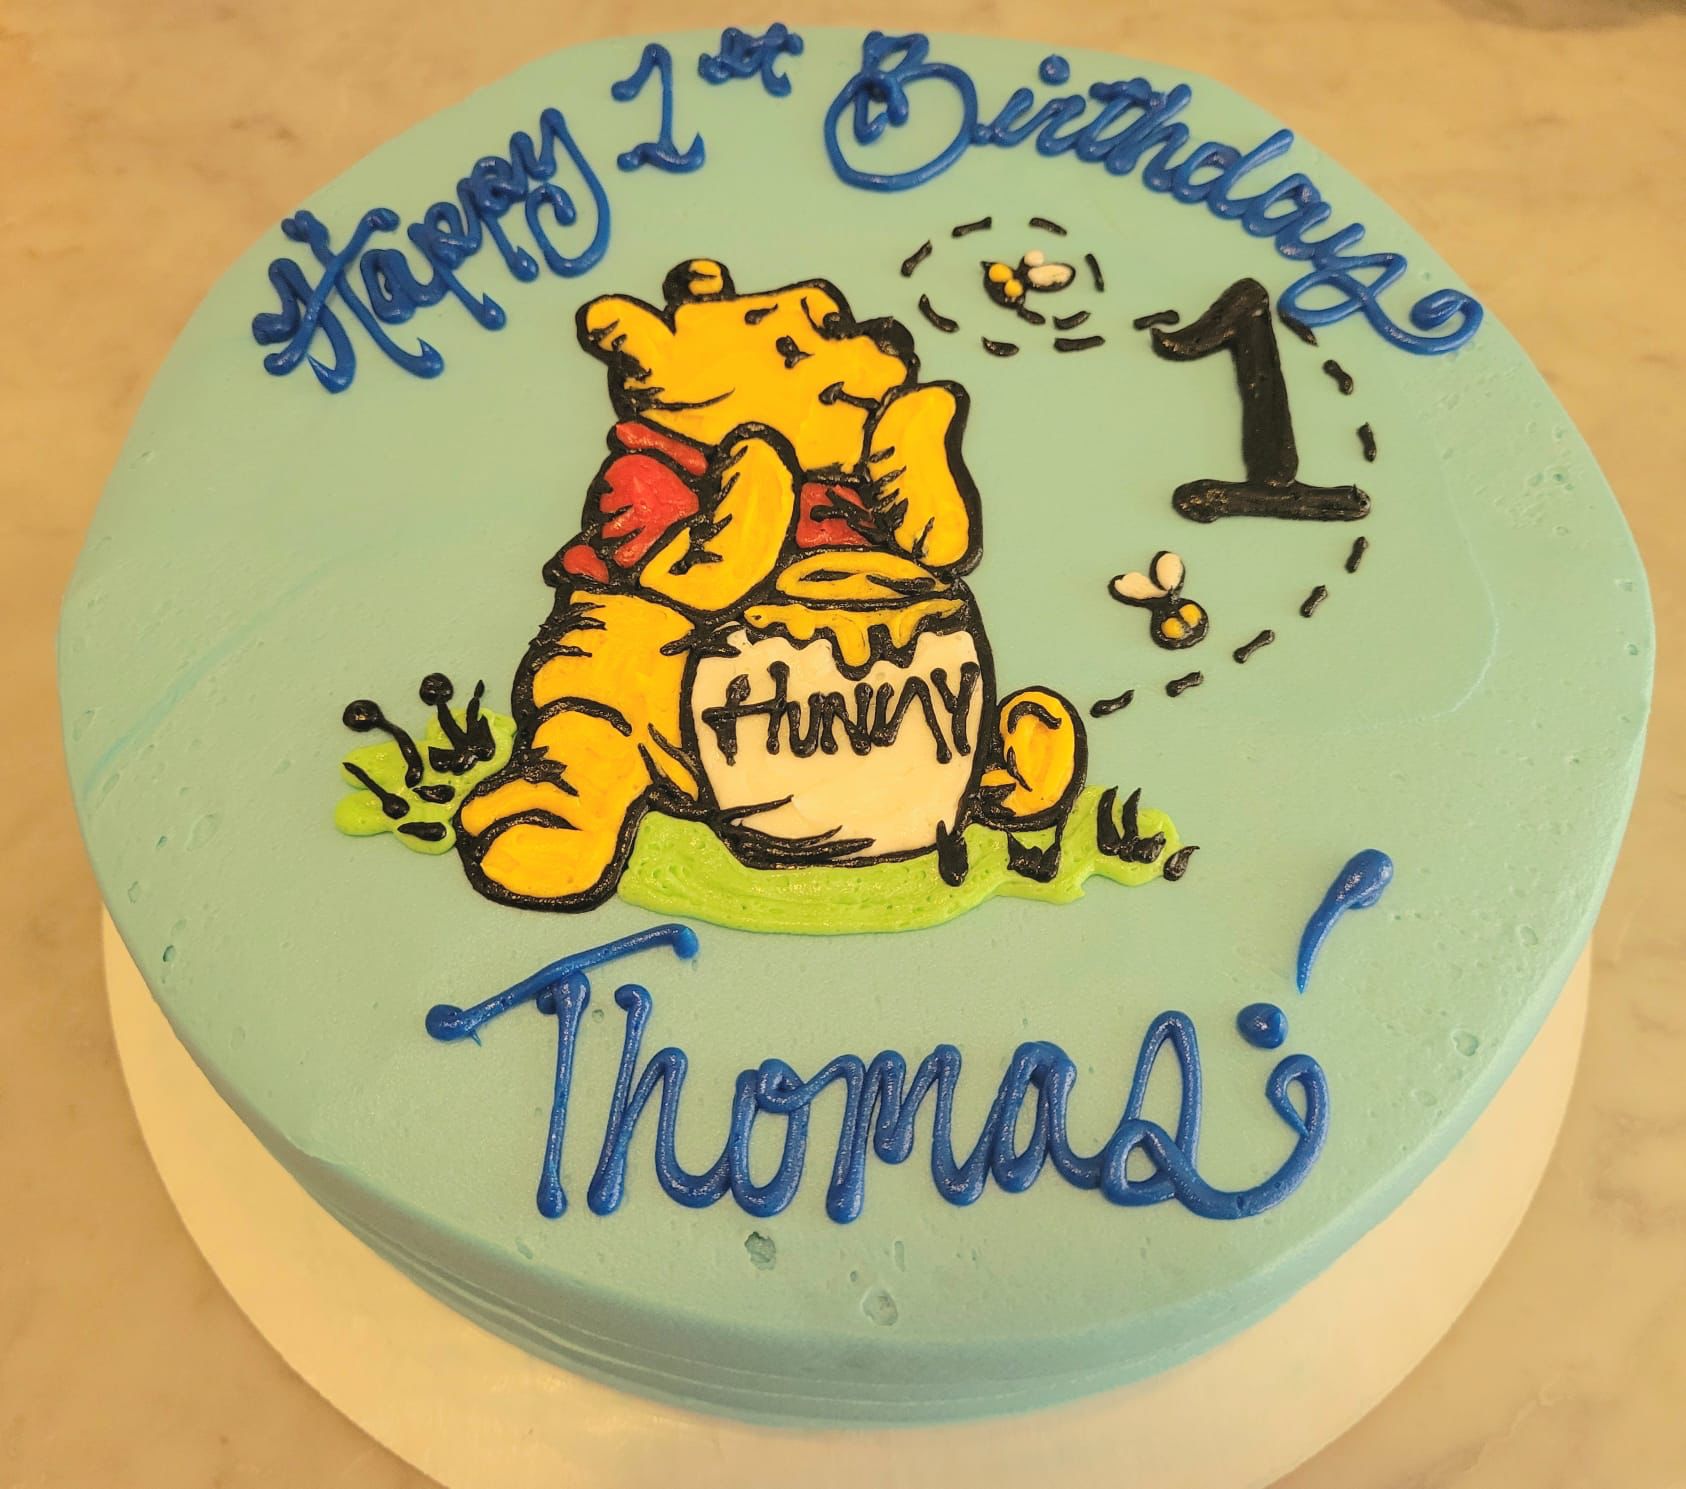 50 Birthday Cake Ideas to Mark Another Year of Joy : Winnie The Pooh Cake